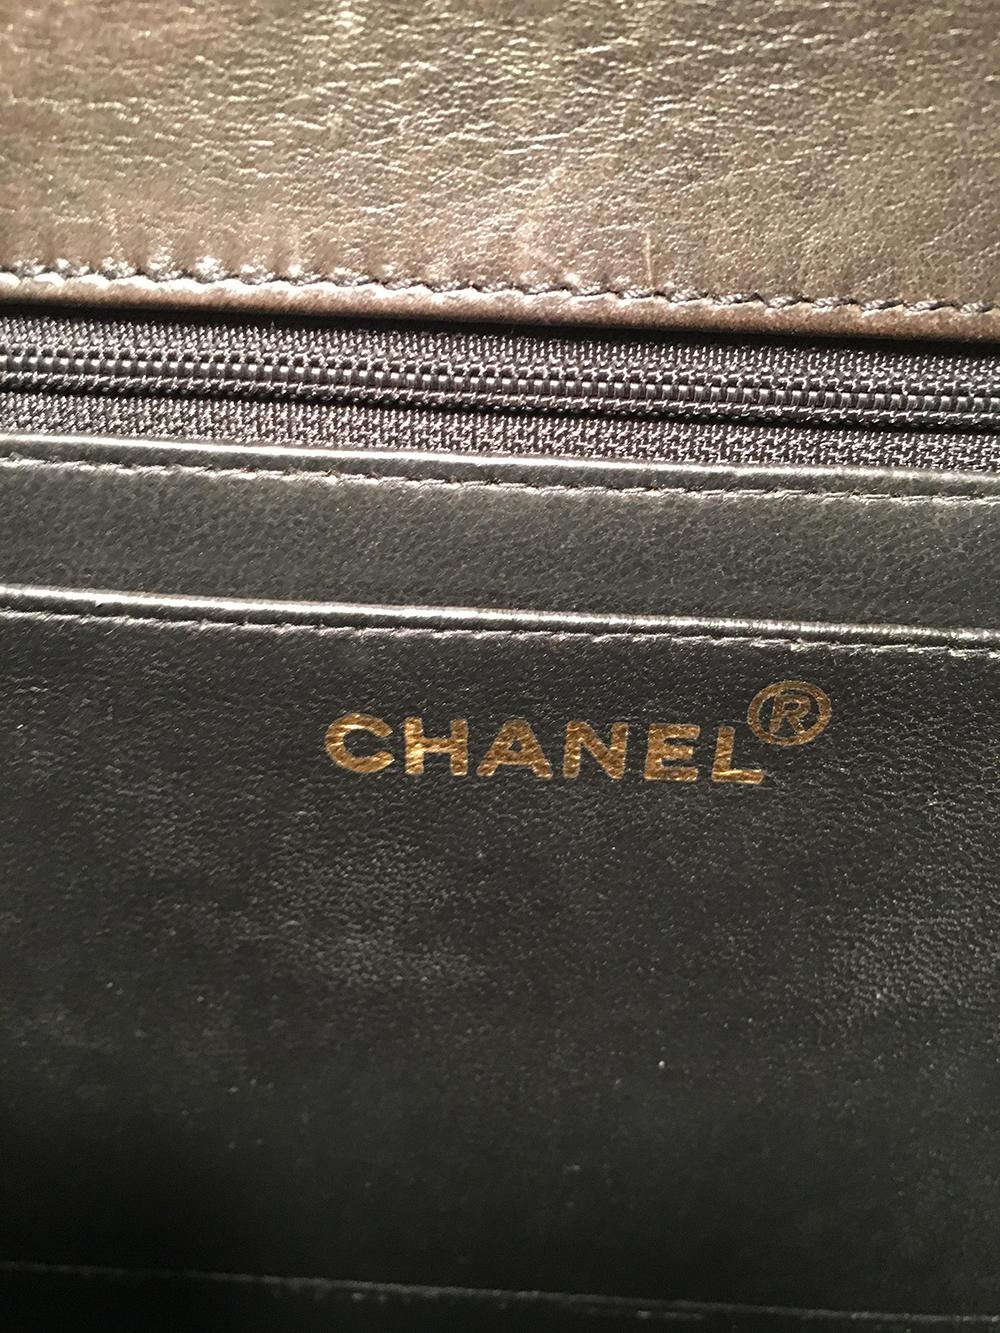 Chanel Black on Black Patent Leather Classic Flap Shoulder Bag 3